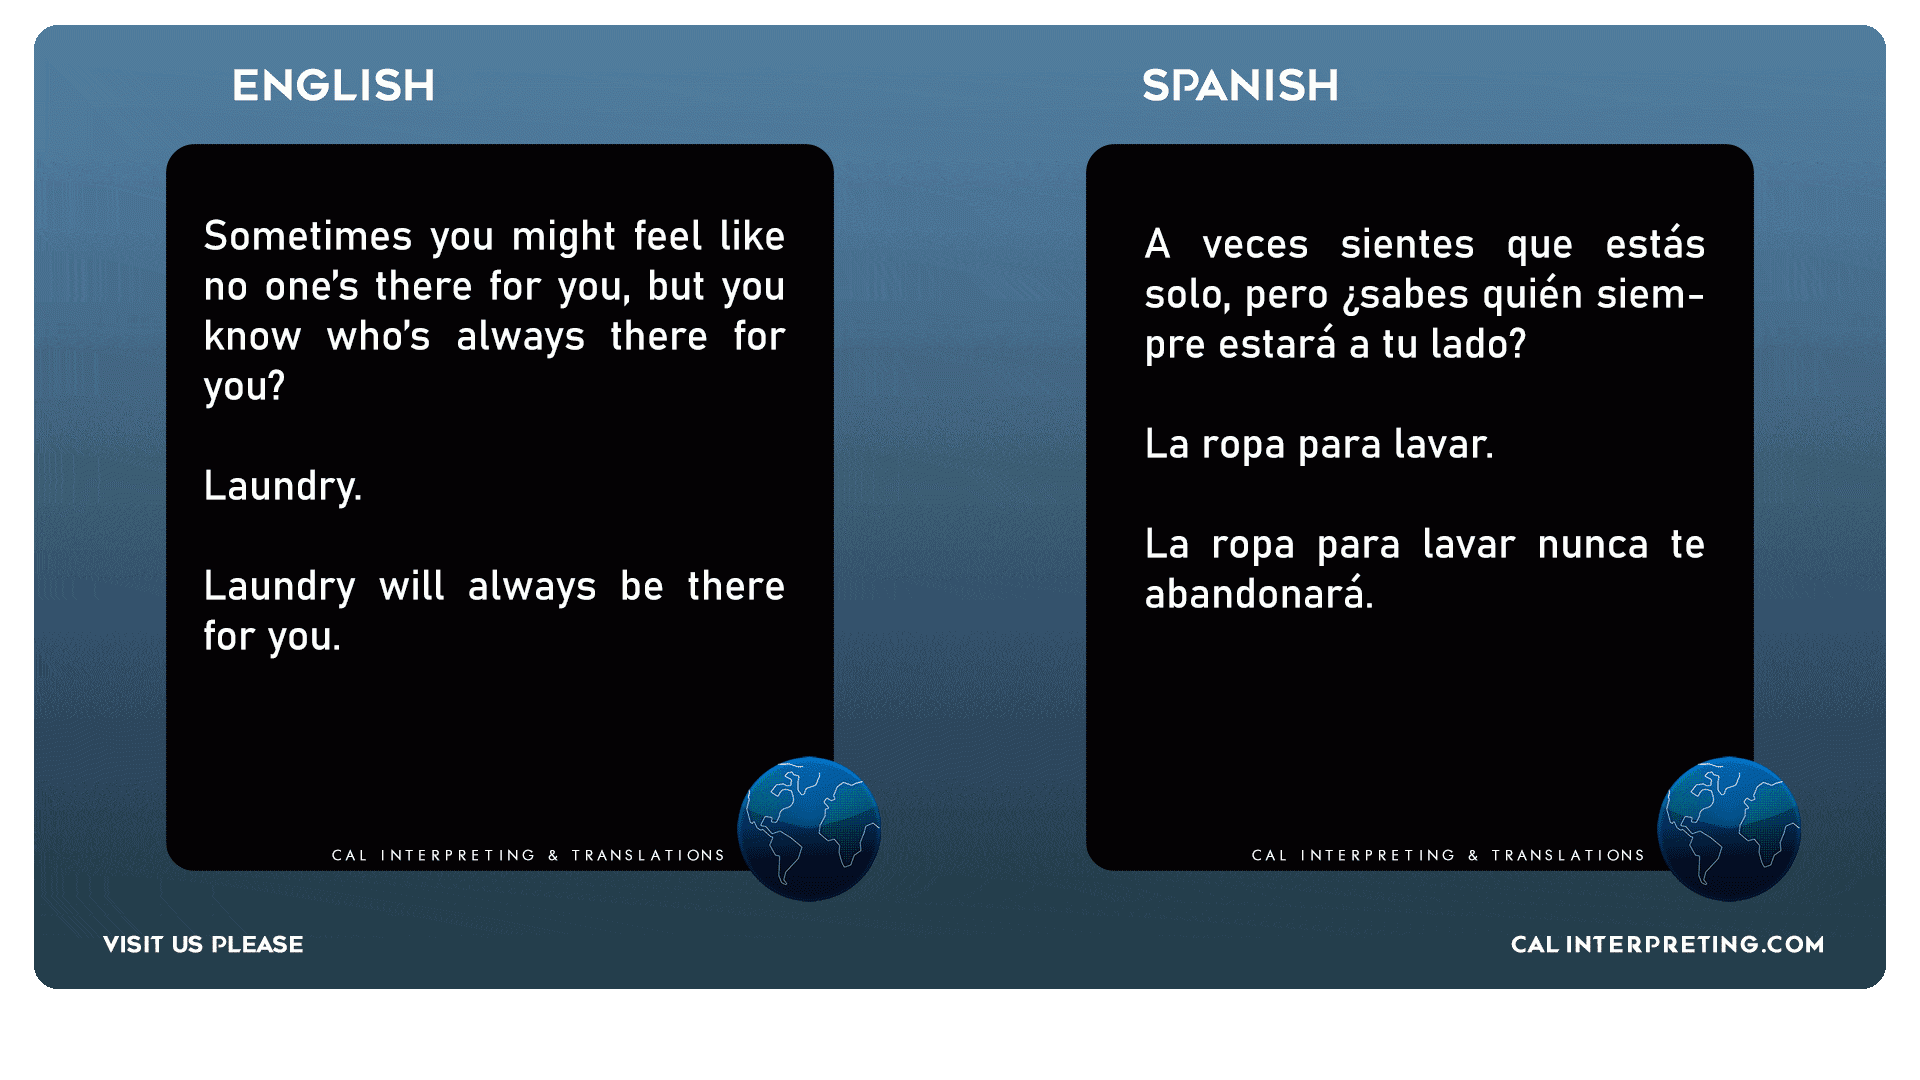 English Meme and Spanish Translation side-by-side.